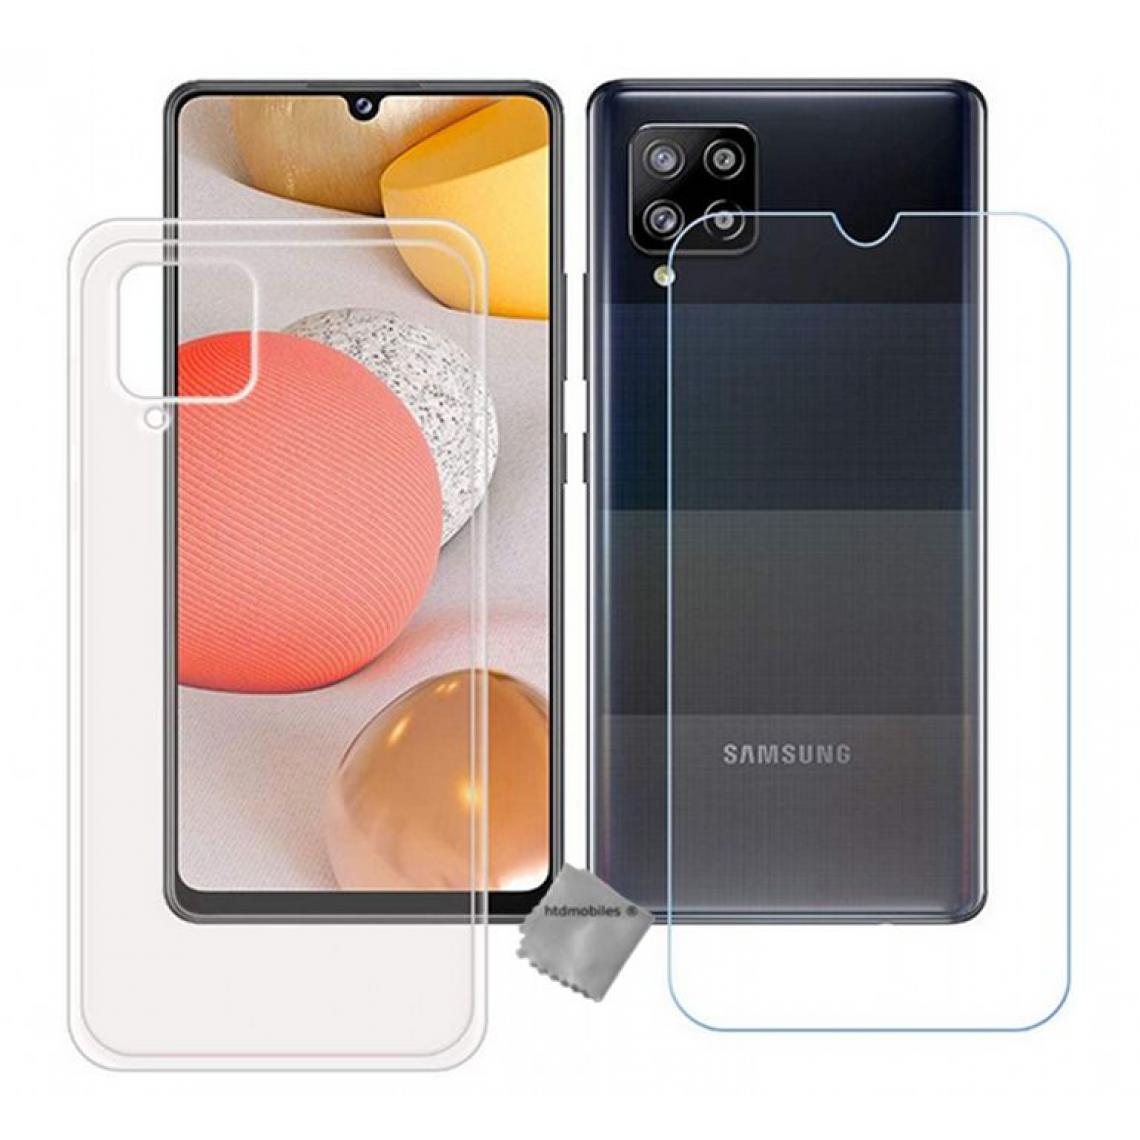 Htdmobiles - Housse etui coque pochette silicone gel fine pour Samsung Galaxy A42 5G + film ecran - BLANC TRANSPARENT - Coque, étui smartphone